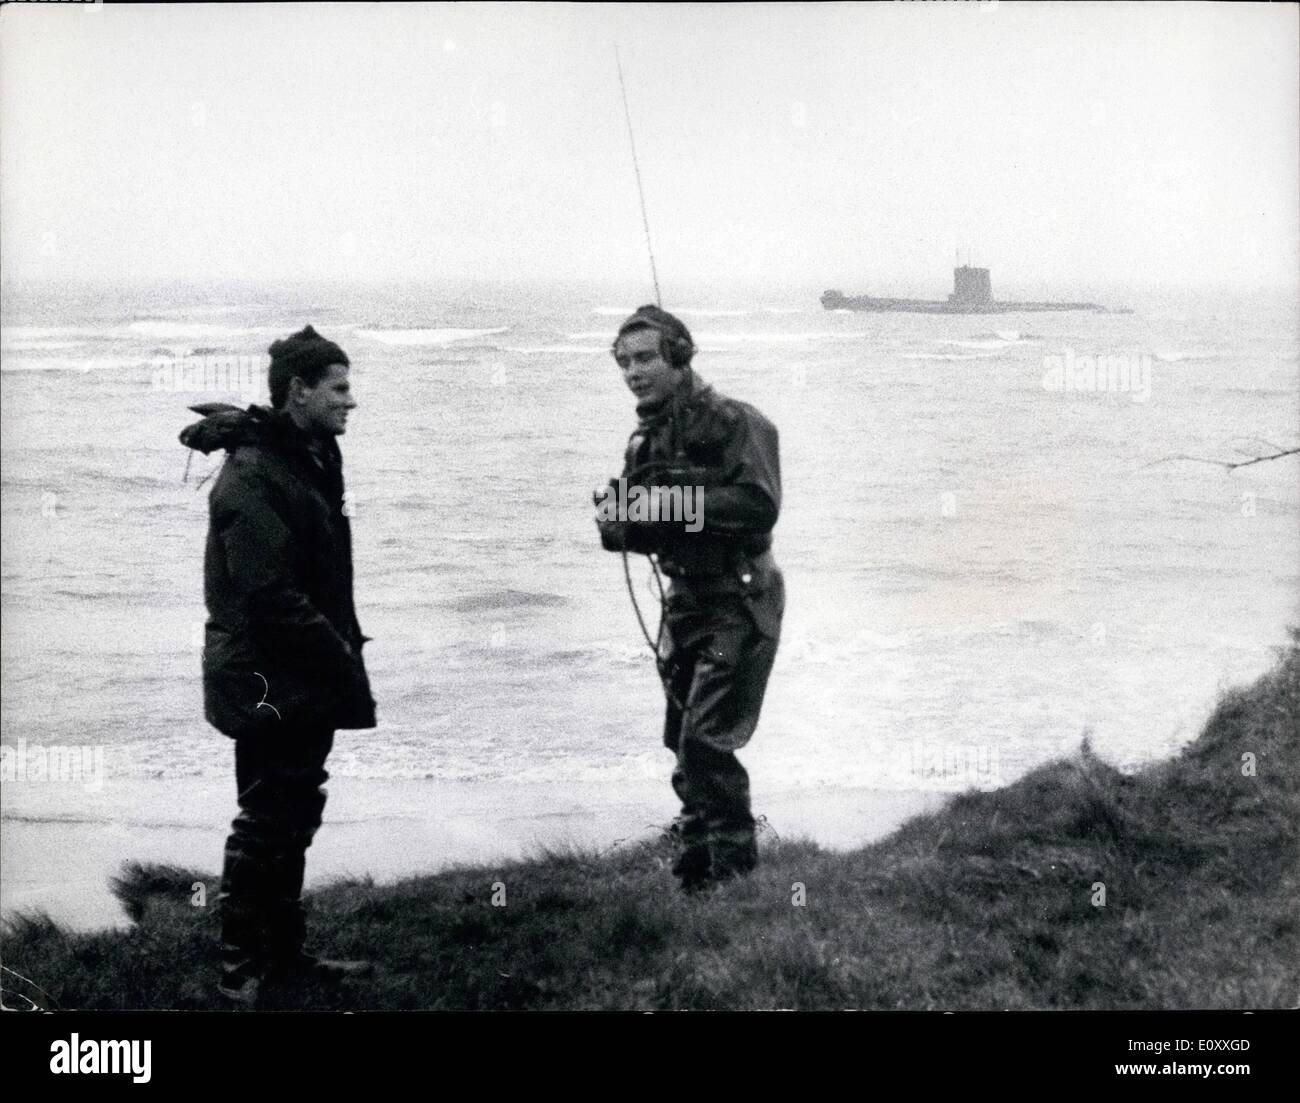 Jan. 01, 1968 - British Submarine Runs Aground off the isle of wight: The Submarine ''Alliance'' 1,120-tons, ran aground on the Stock Photo